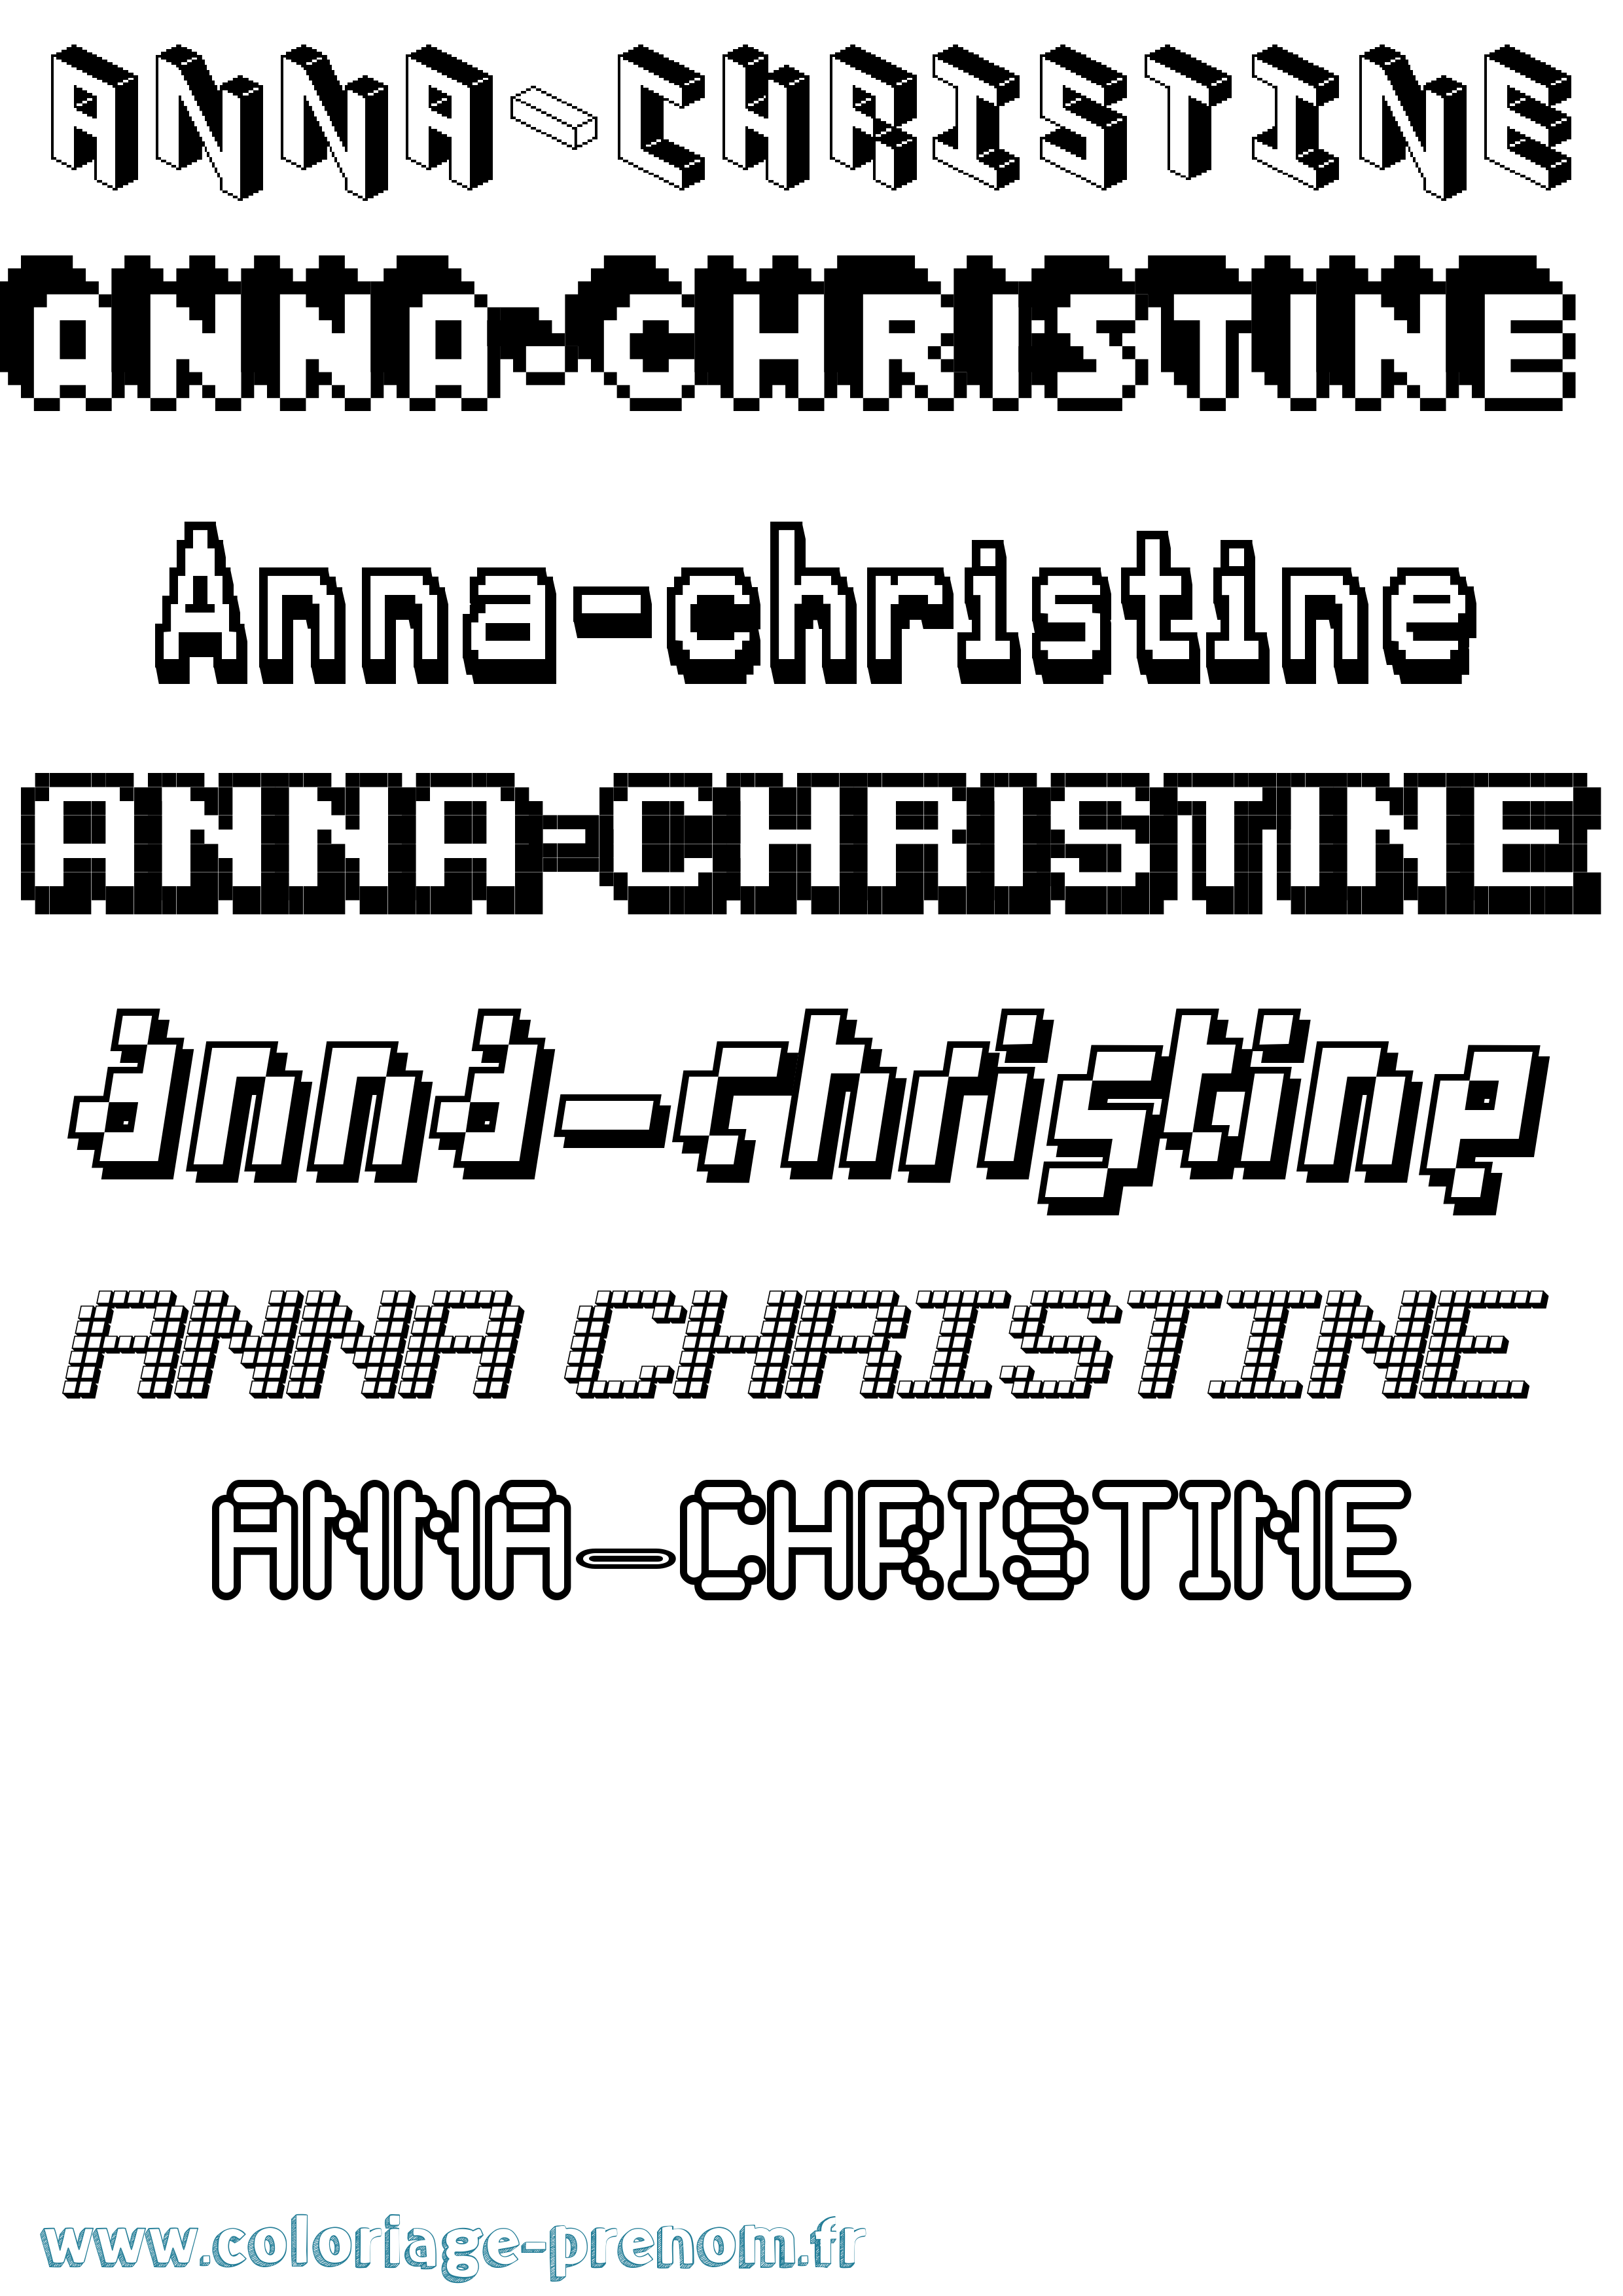 Coloriage prénom Anna-Christine Pixel